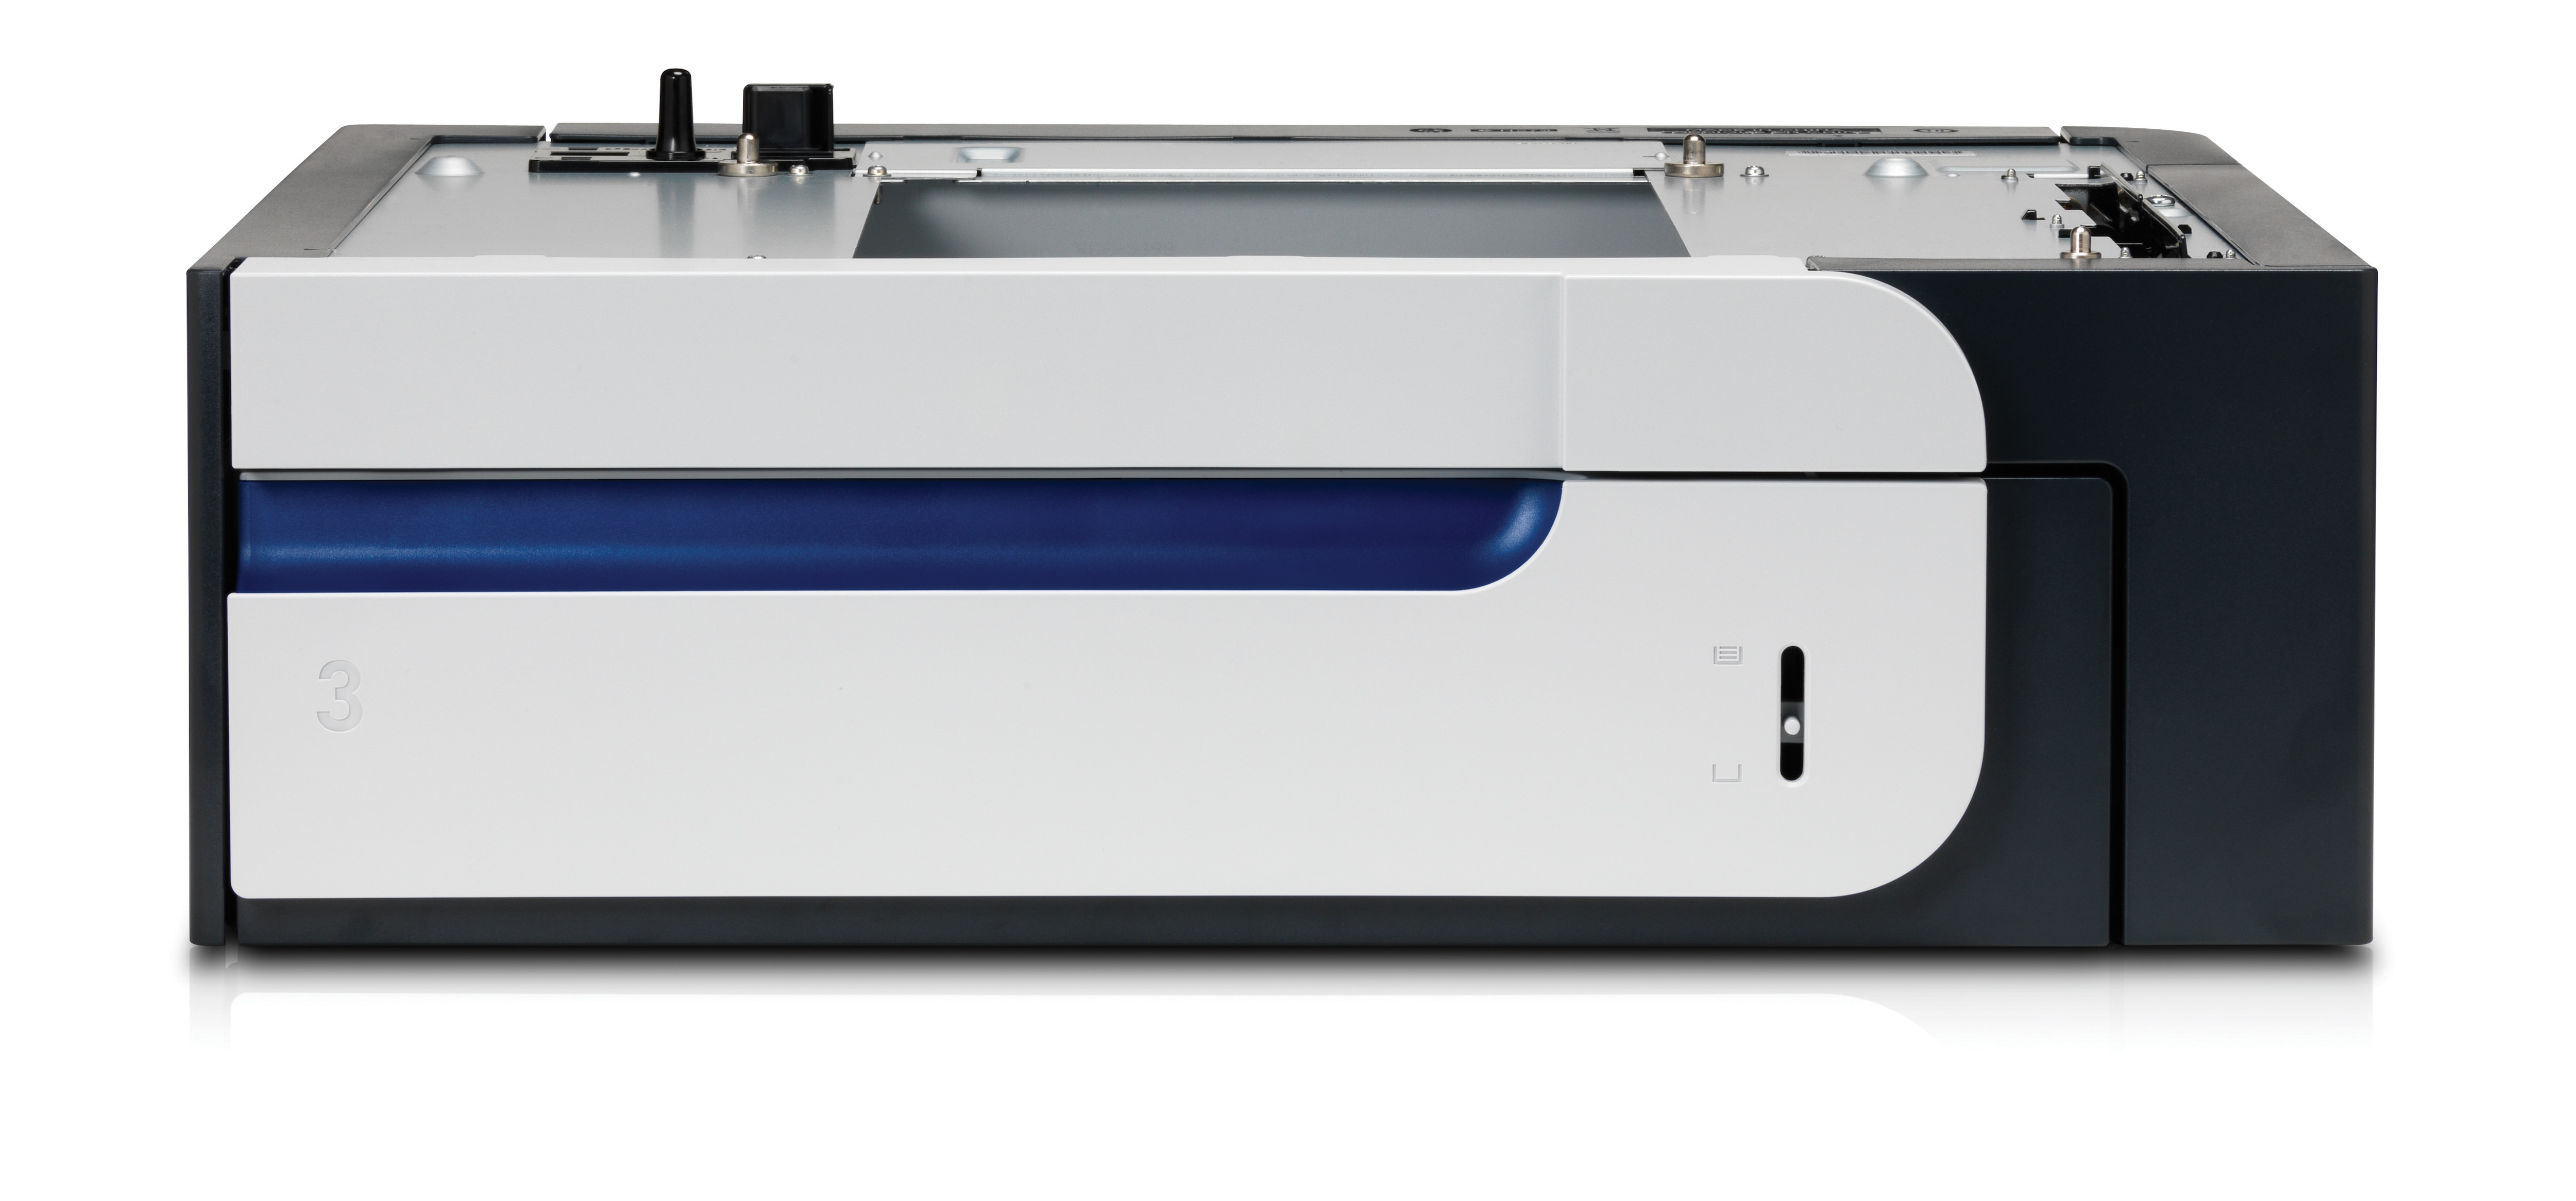  PaperTray 500sheet Laserjet Enterprise 500 Color M551 M575 Serie